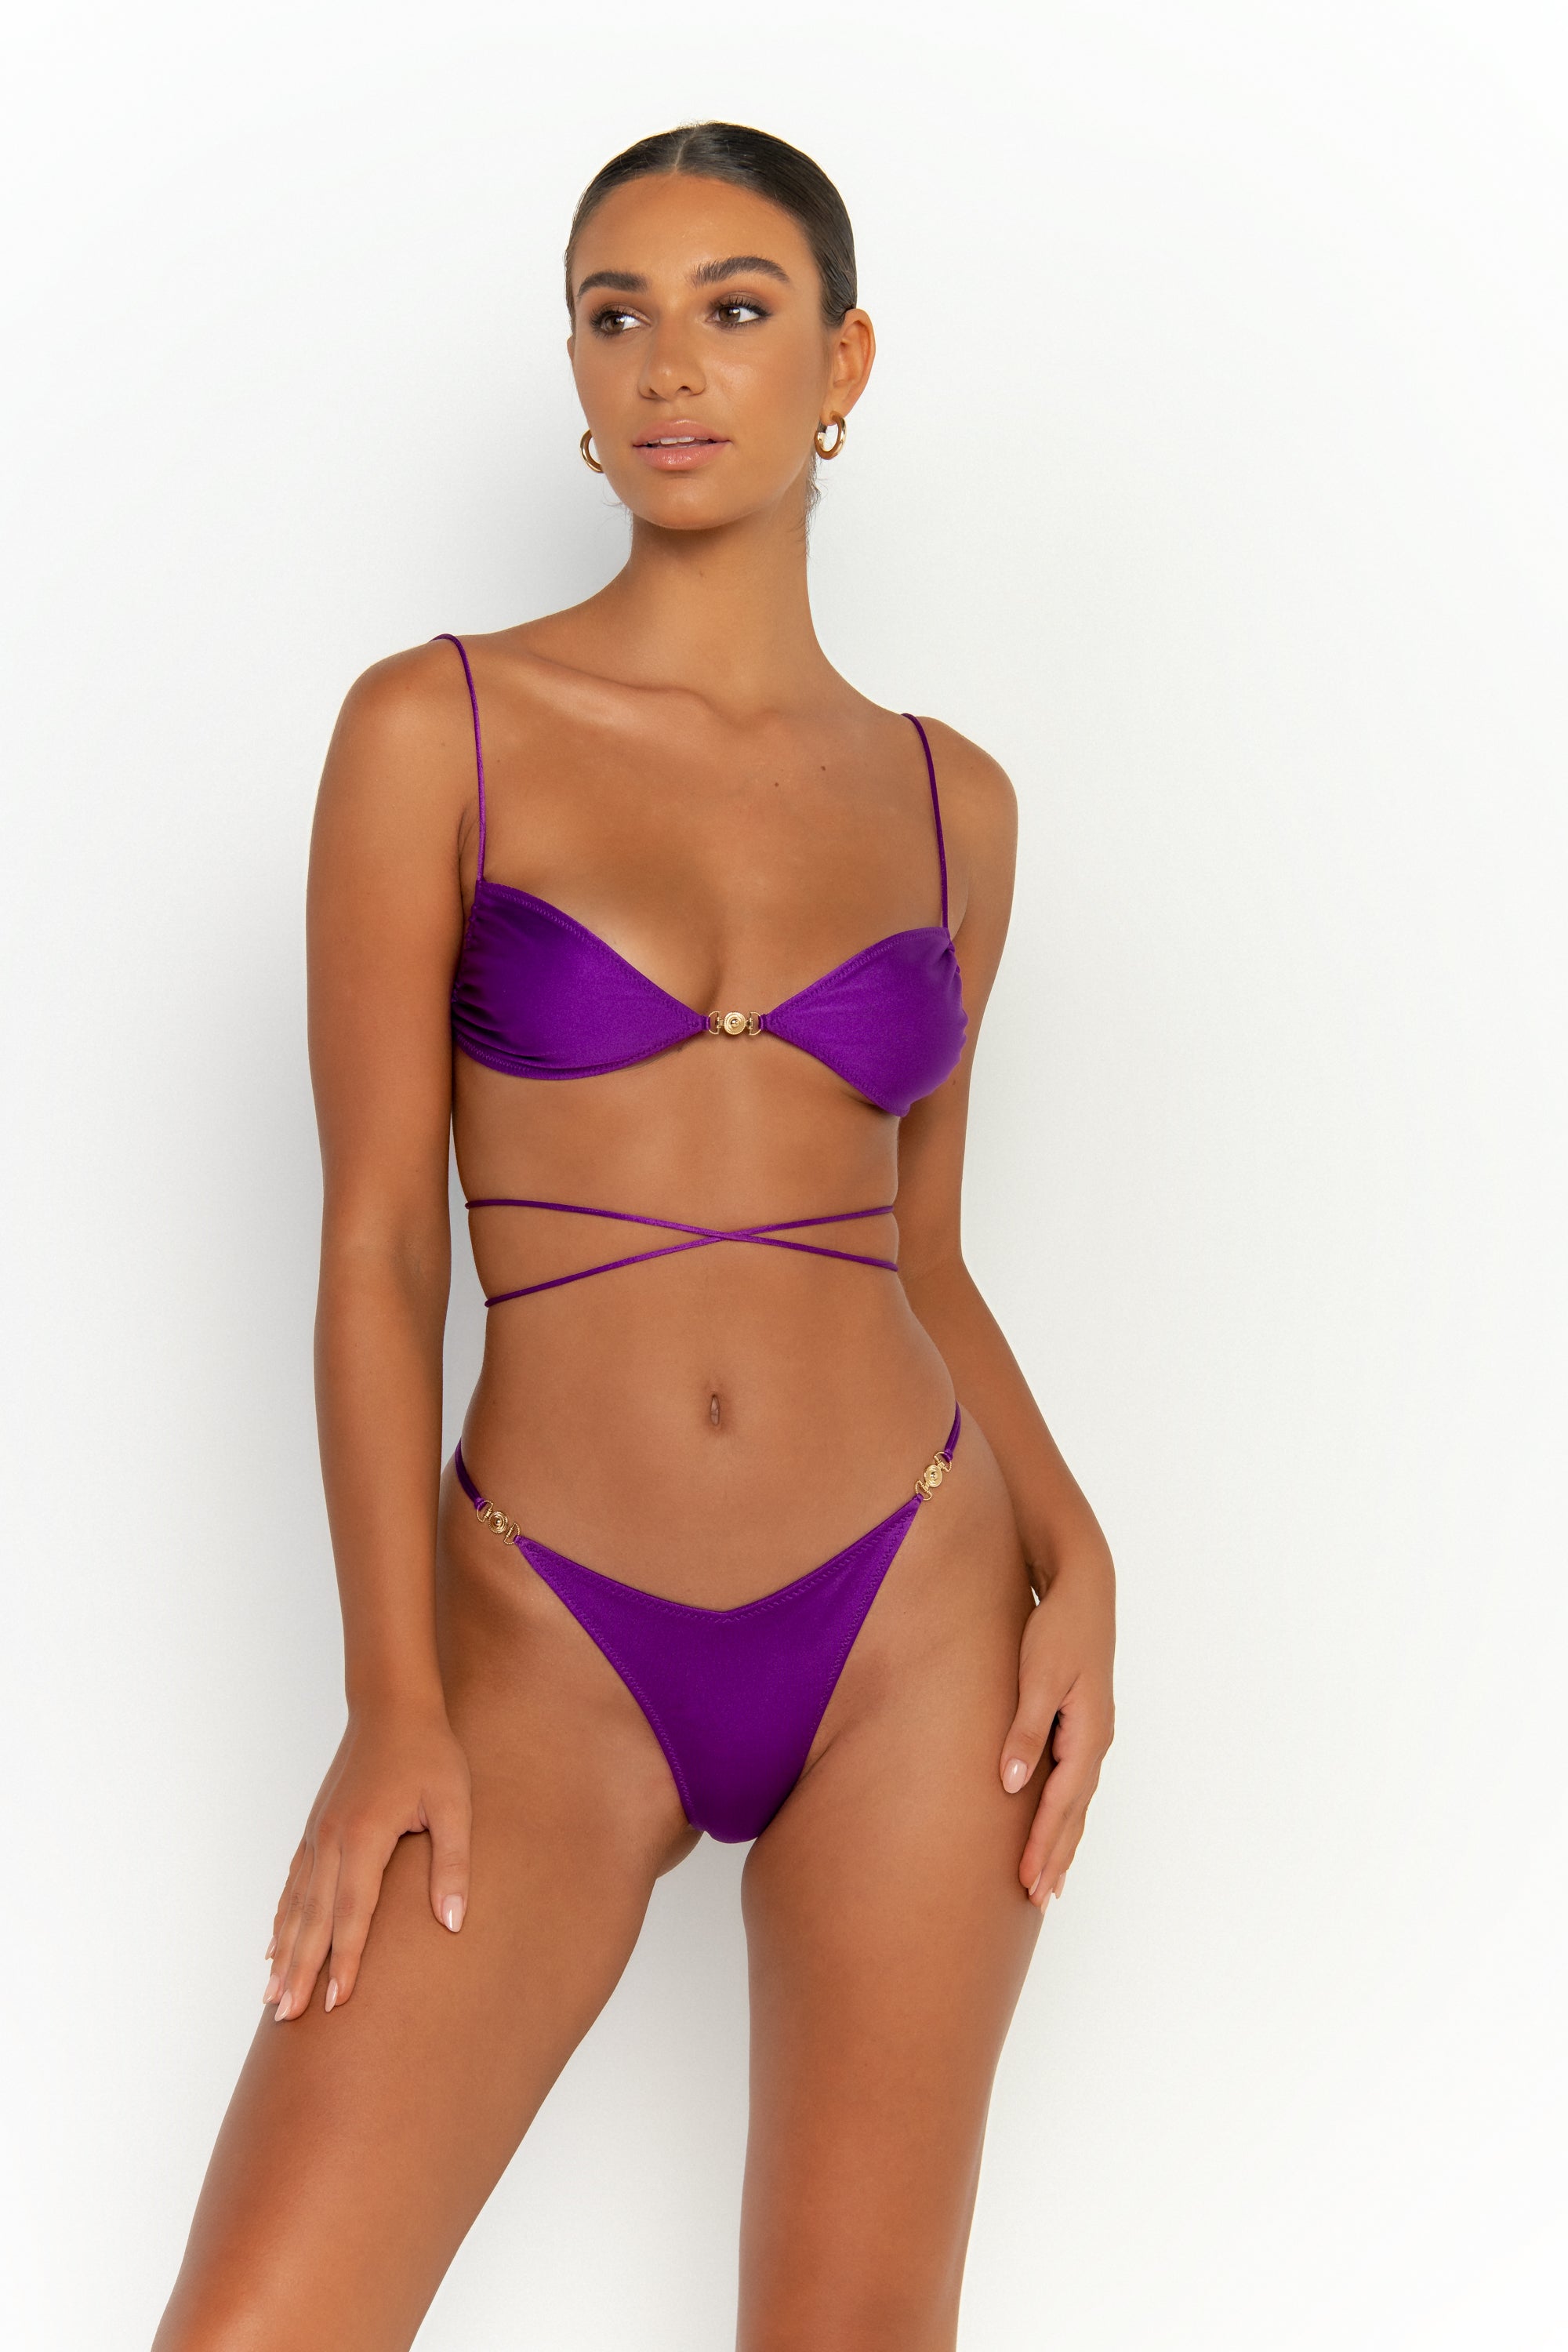 front view womens swimwear designed as high quality bikini from sommer swim swimwear australia - ella petunia is a purple bikini with bralette bikini top